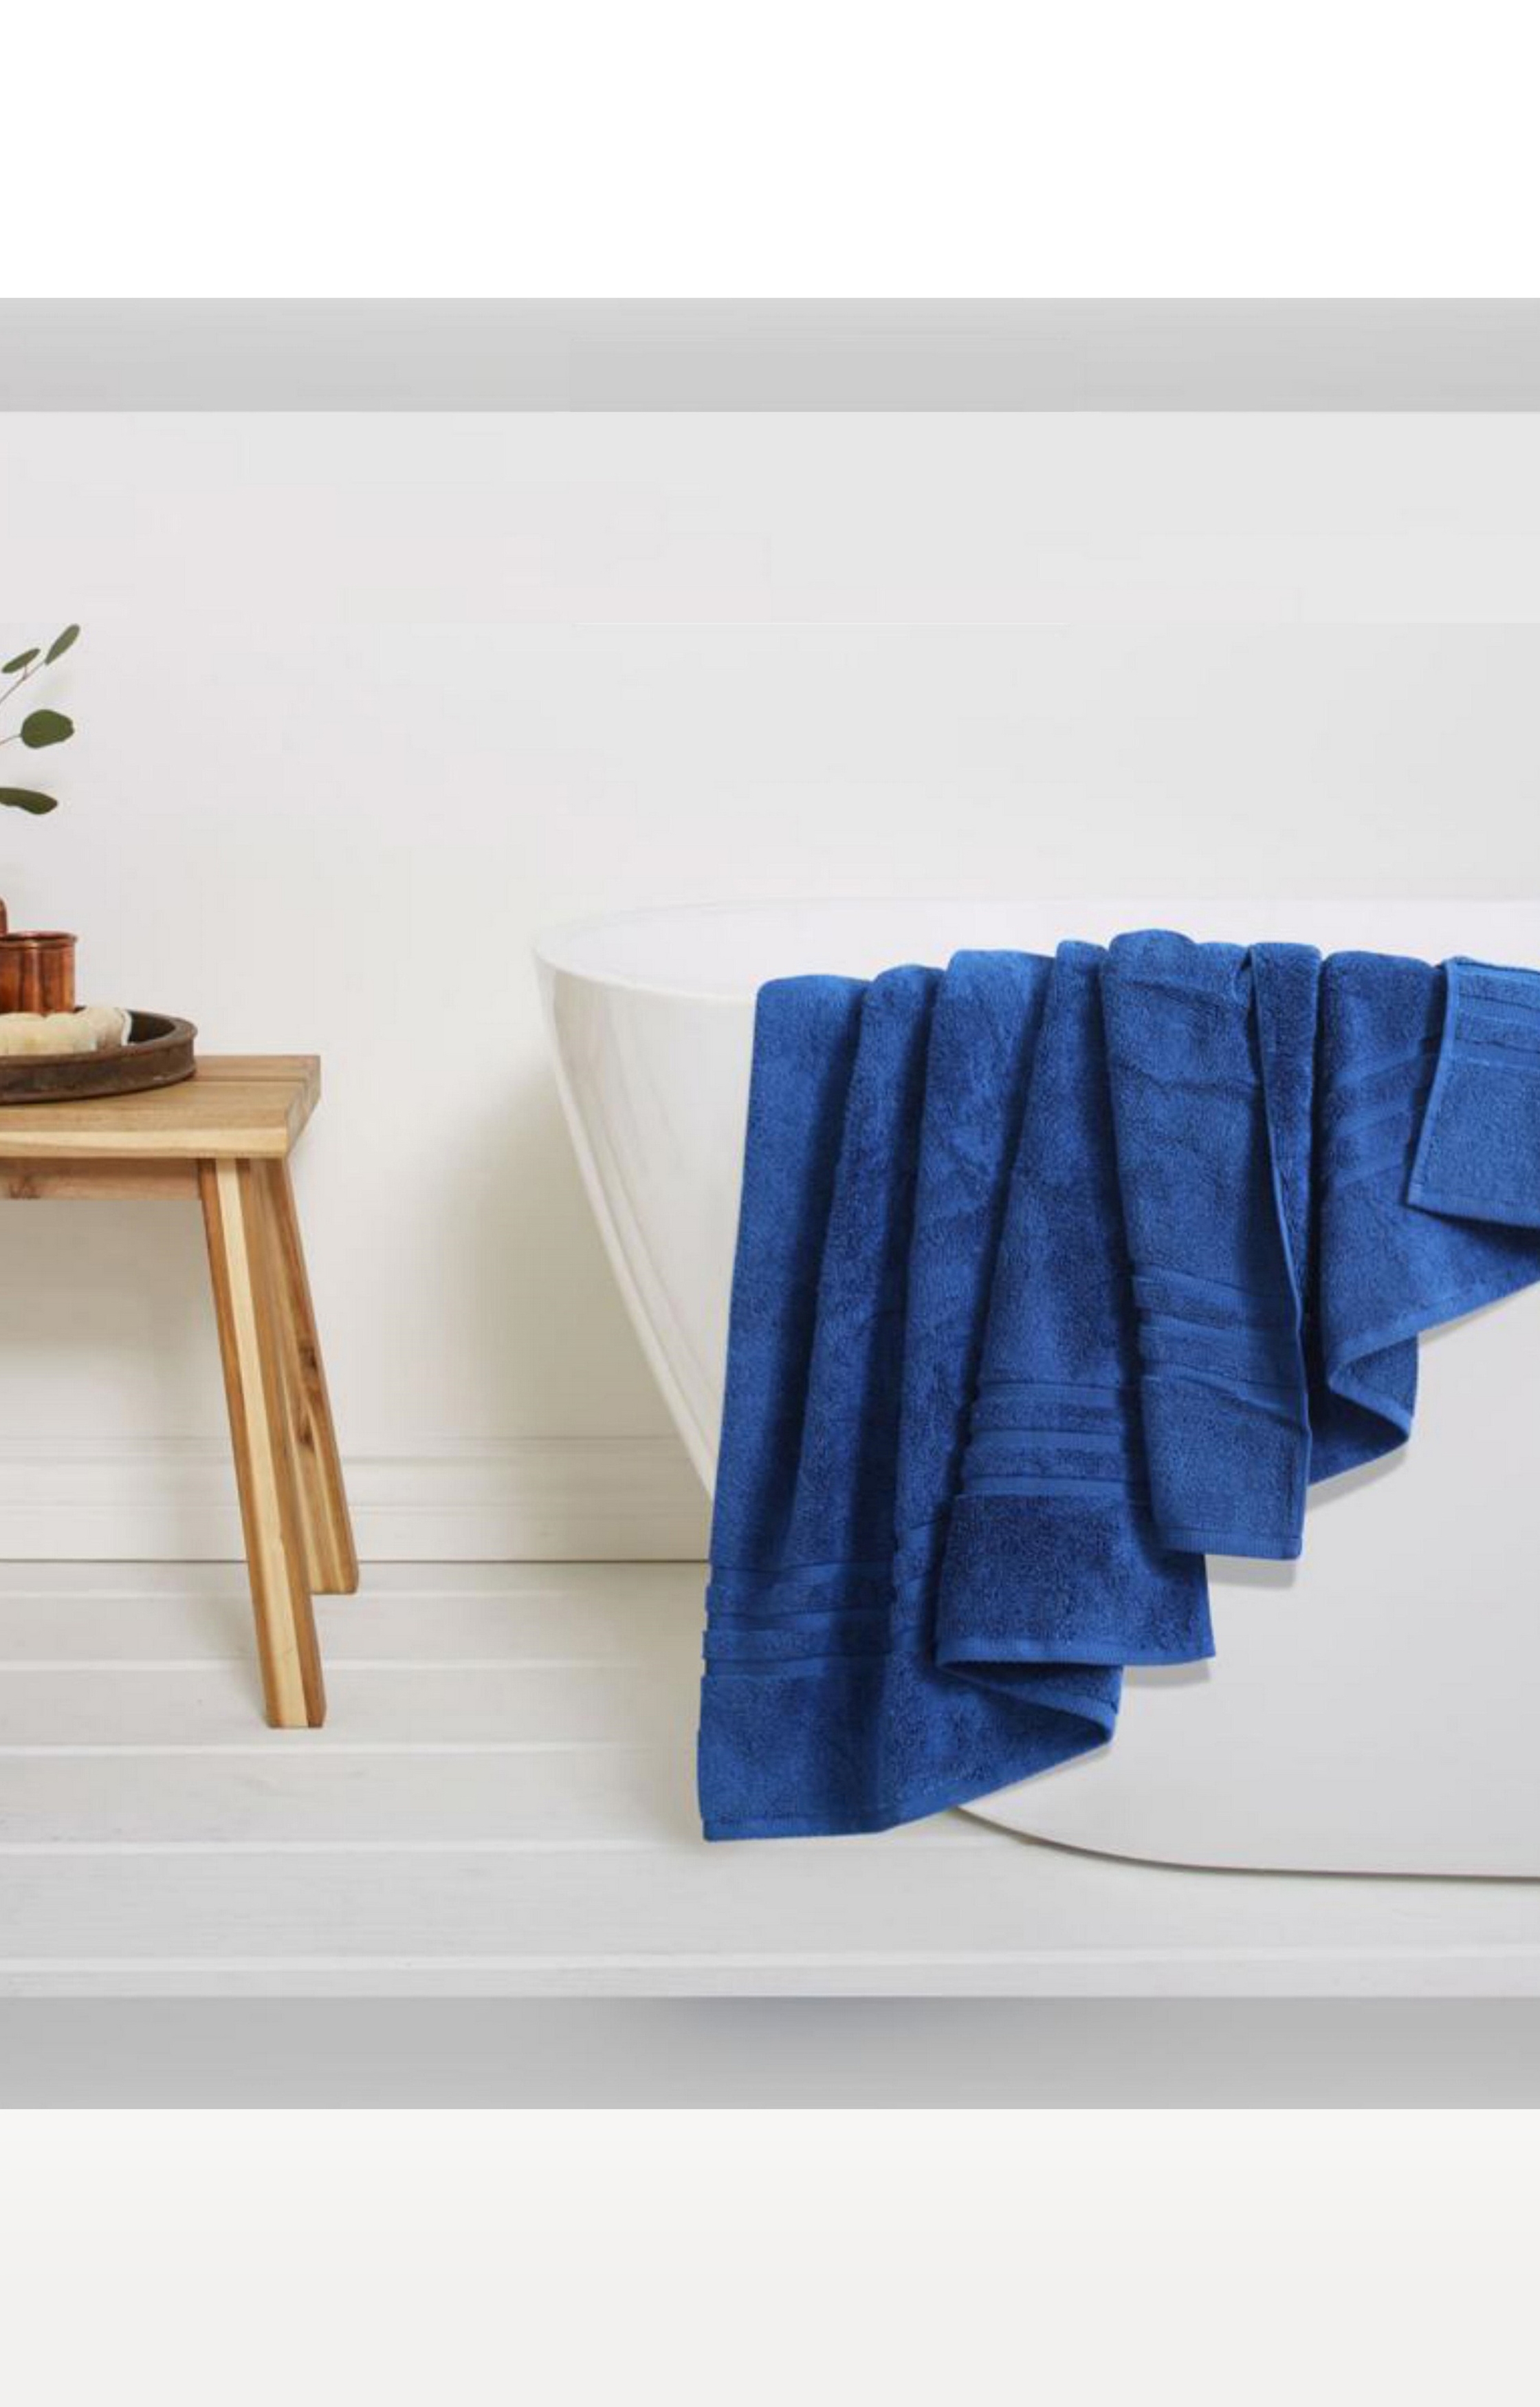 Sita Fabrics | Sita Fabrics Premium Cotton Super Soft Zero Twist Yarn Very Airy 600 GSM Bath Towel - Blue